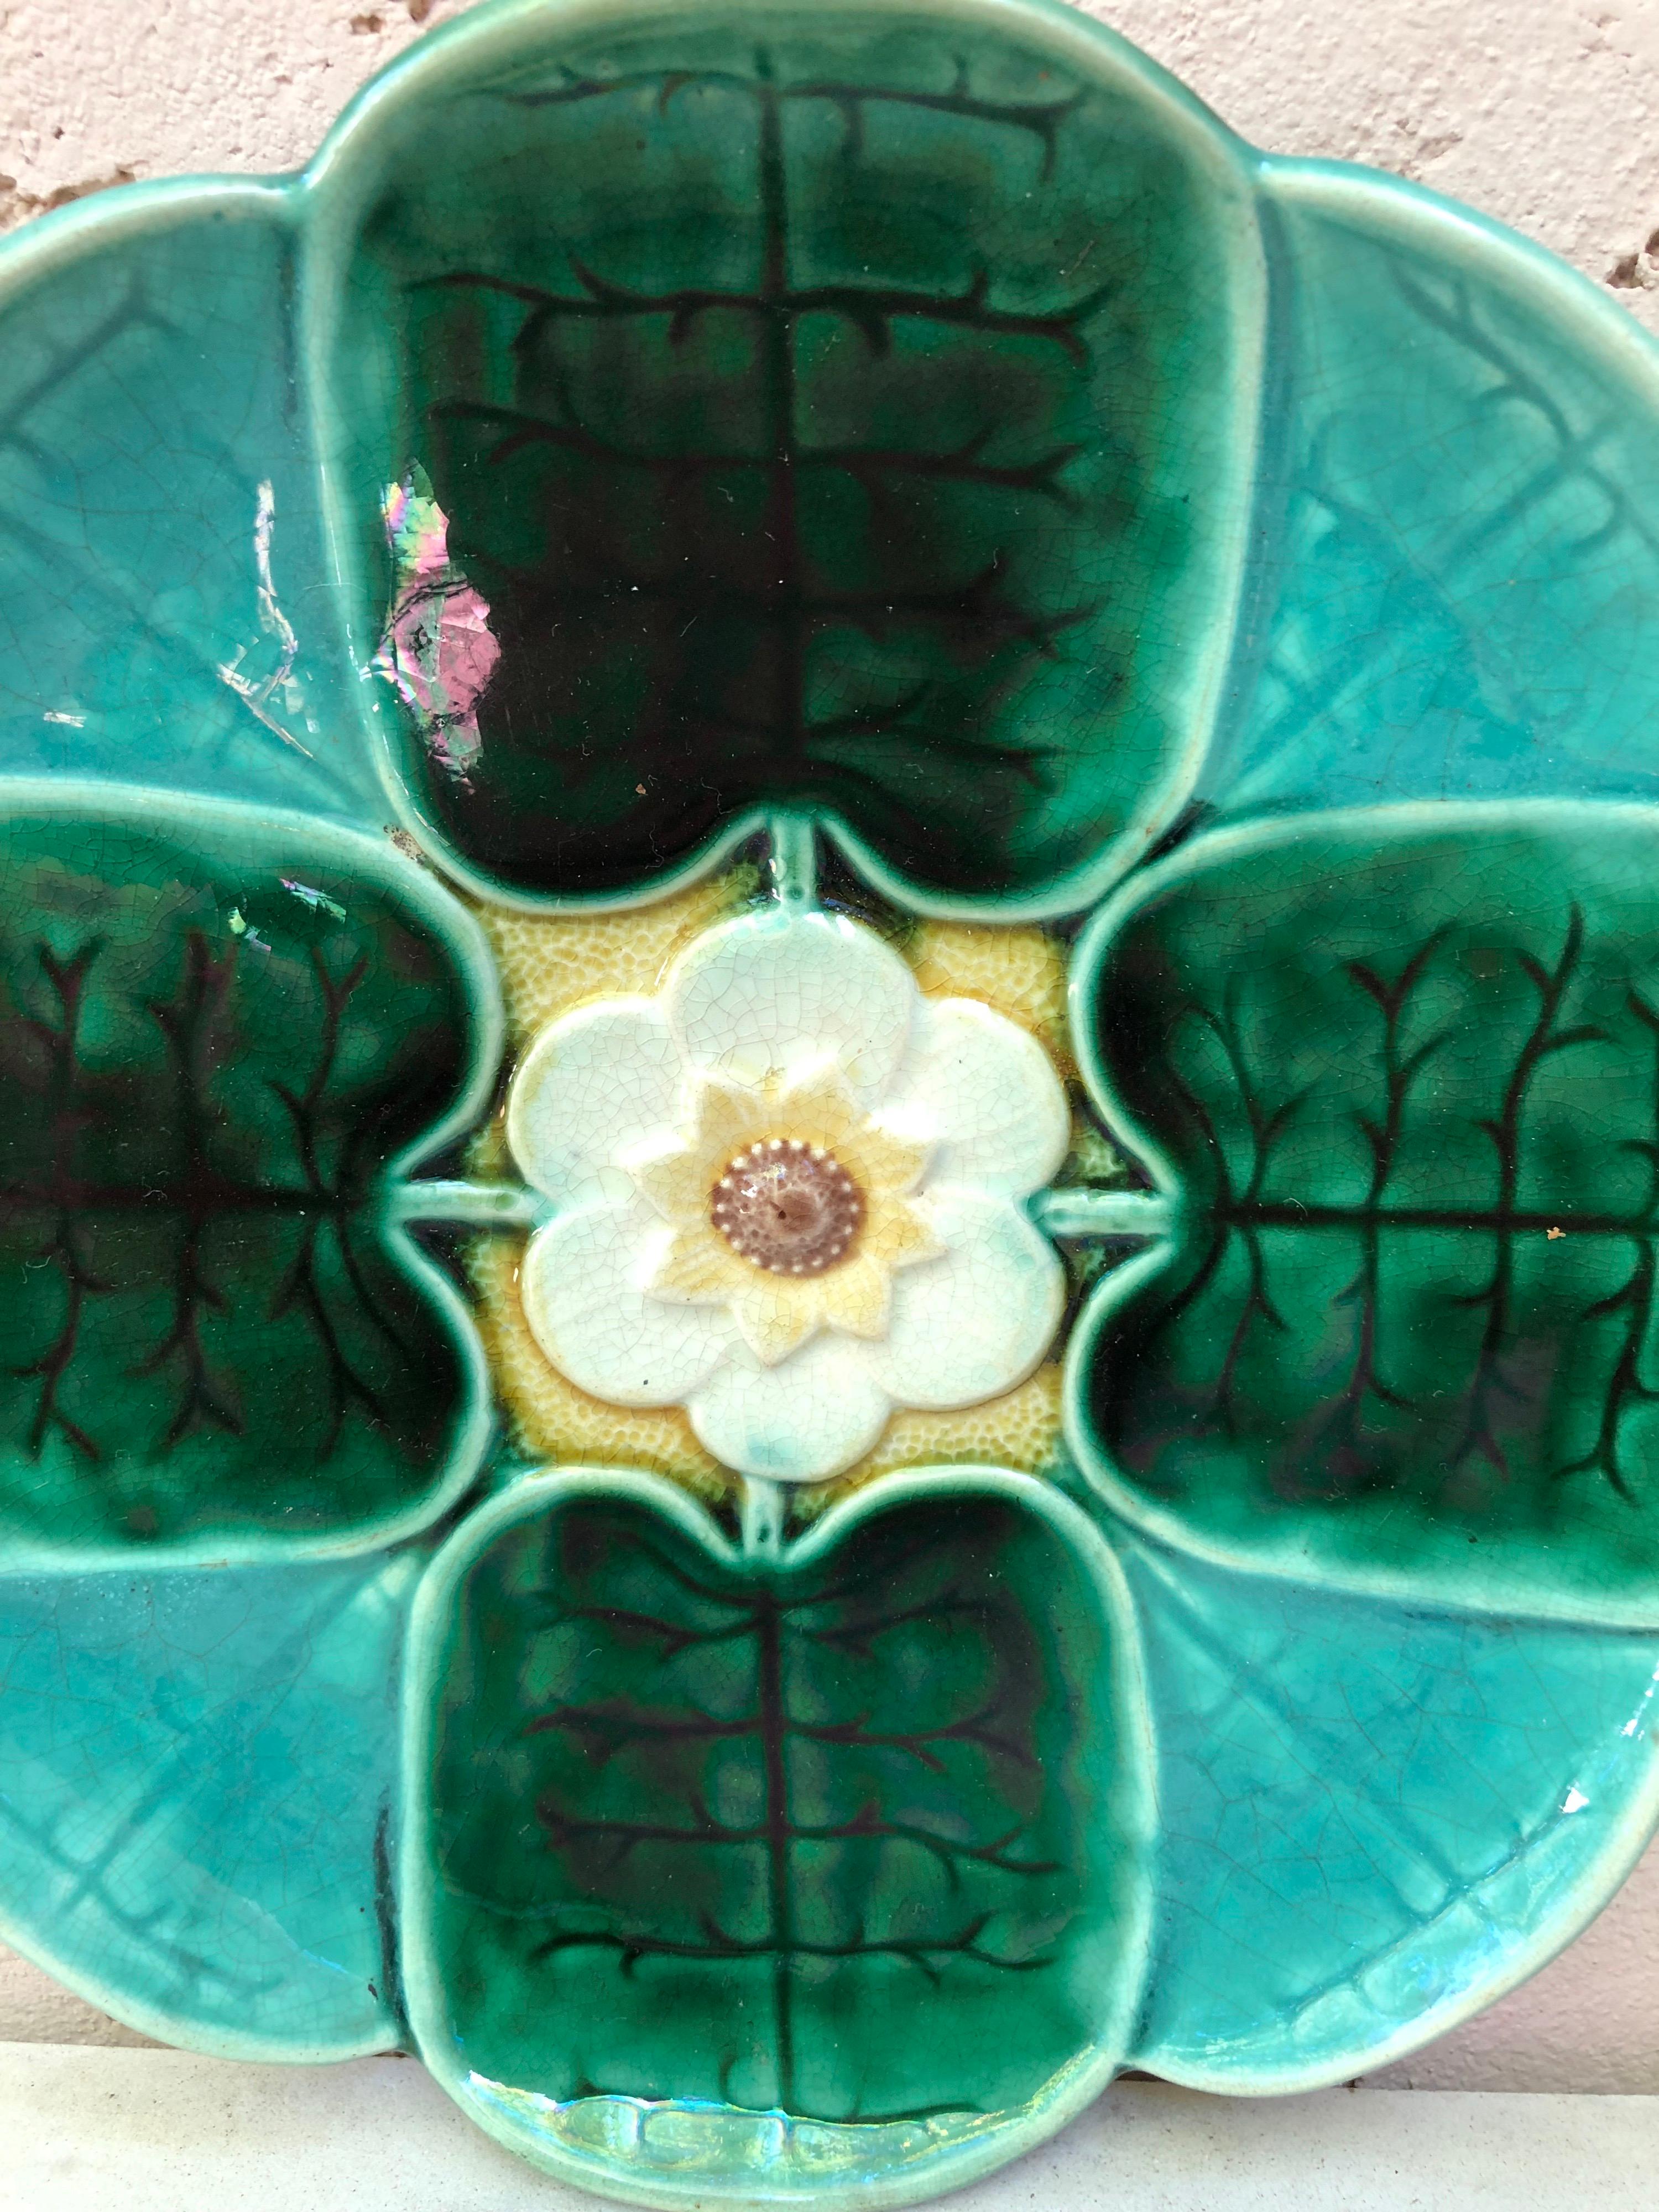 American Majolica Water Lily Plate signed Etruscan Majolica Circa 1890.
Unusual colors.